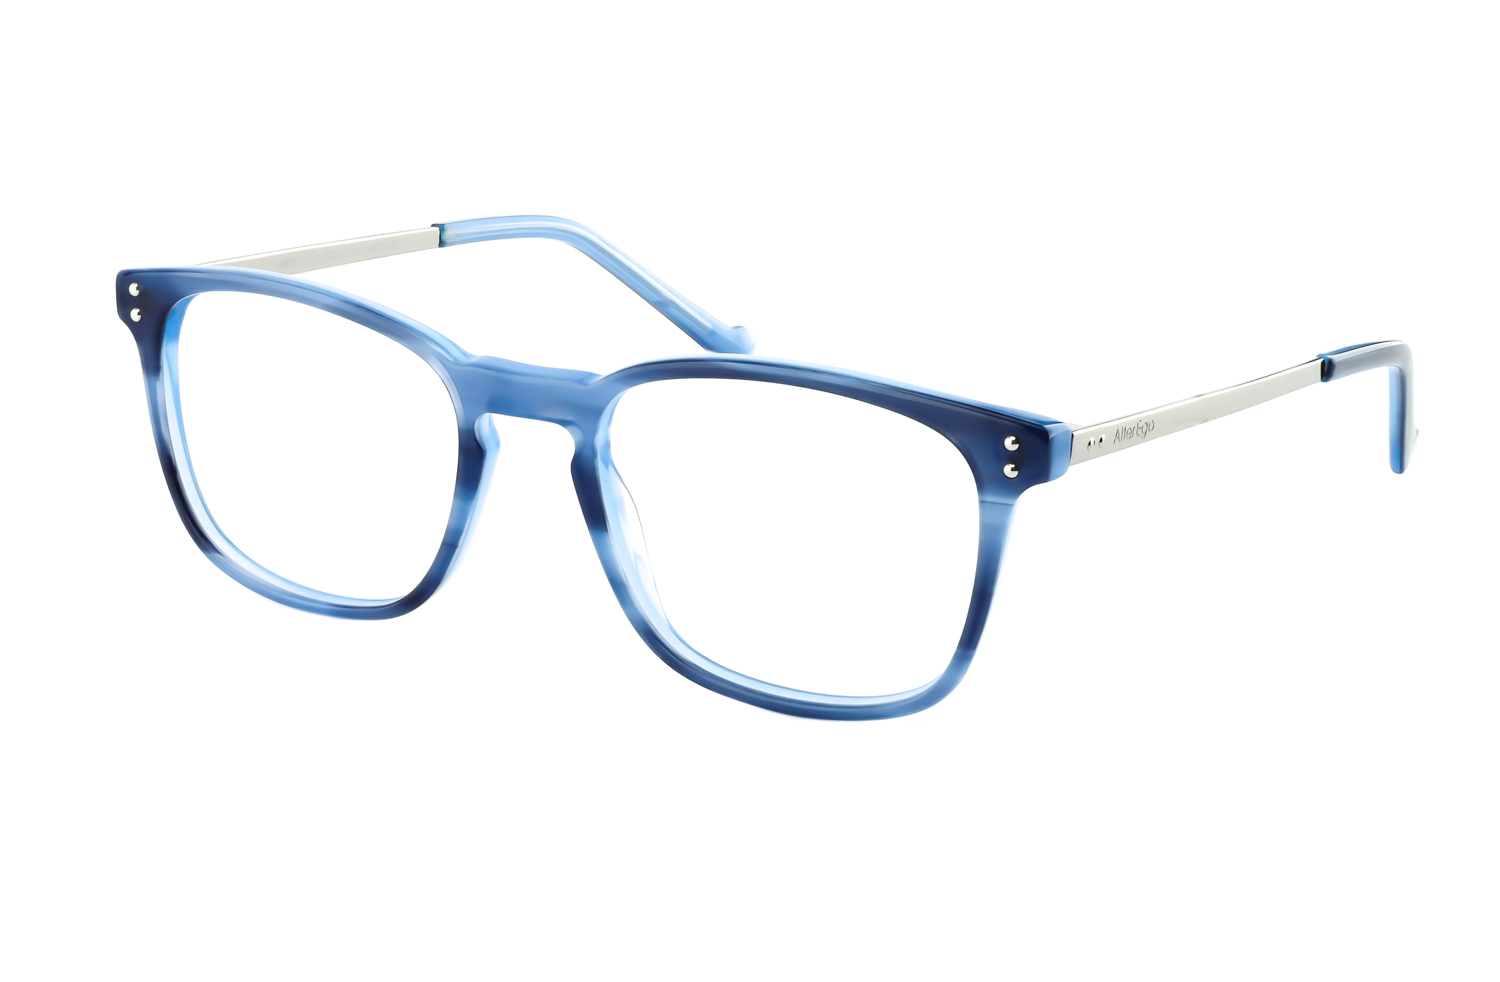 Alter Ego Unisex Shine Blue Glasses Frames Execuspecs